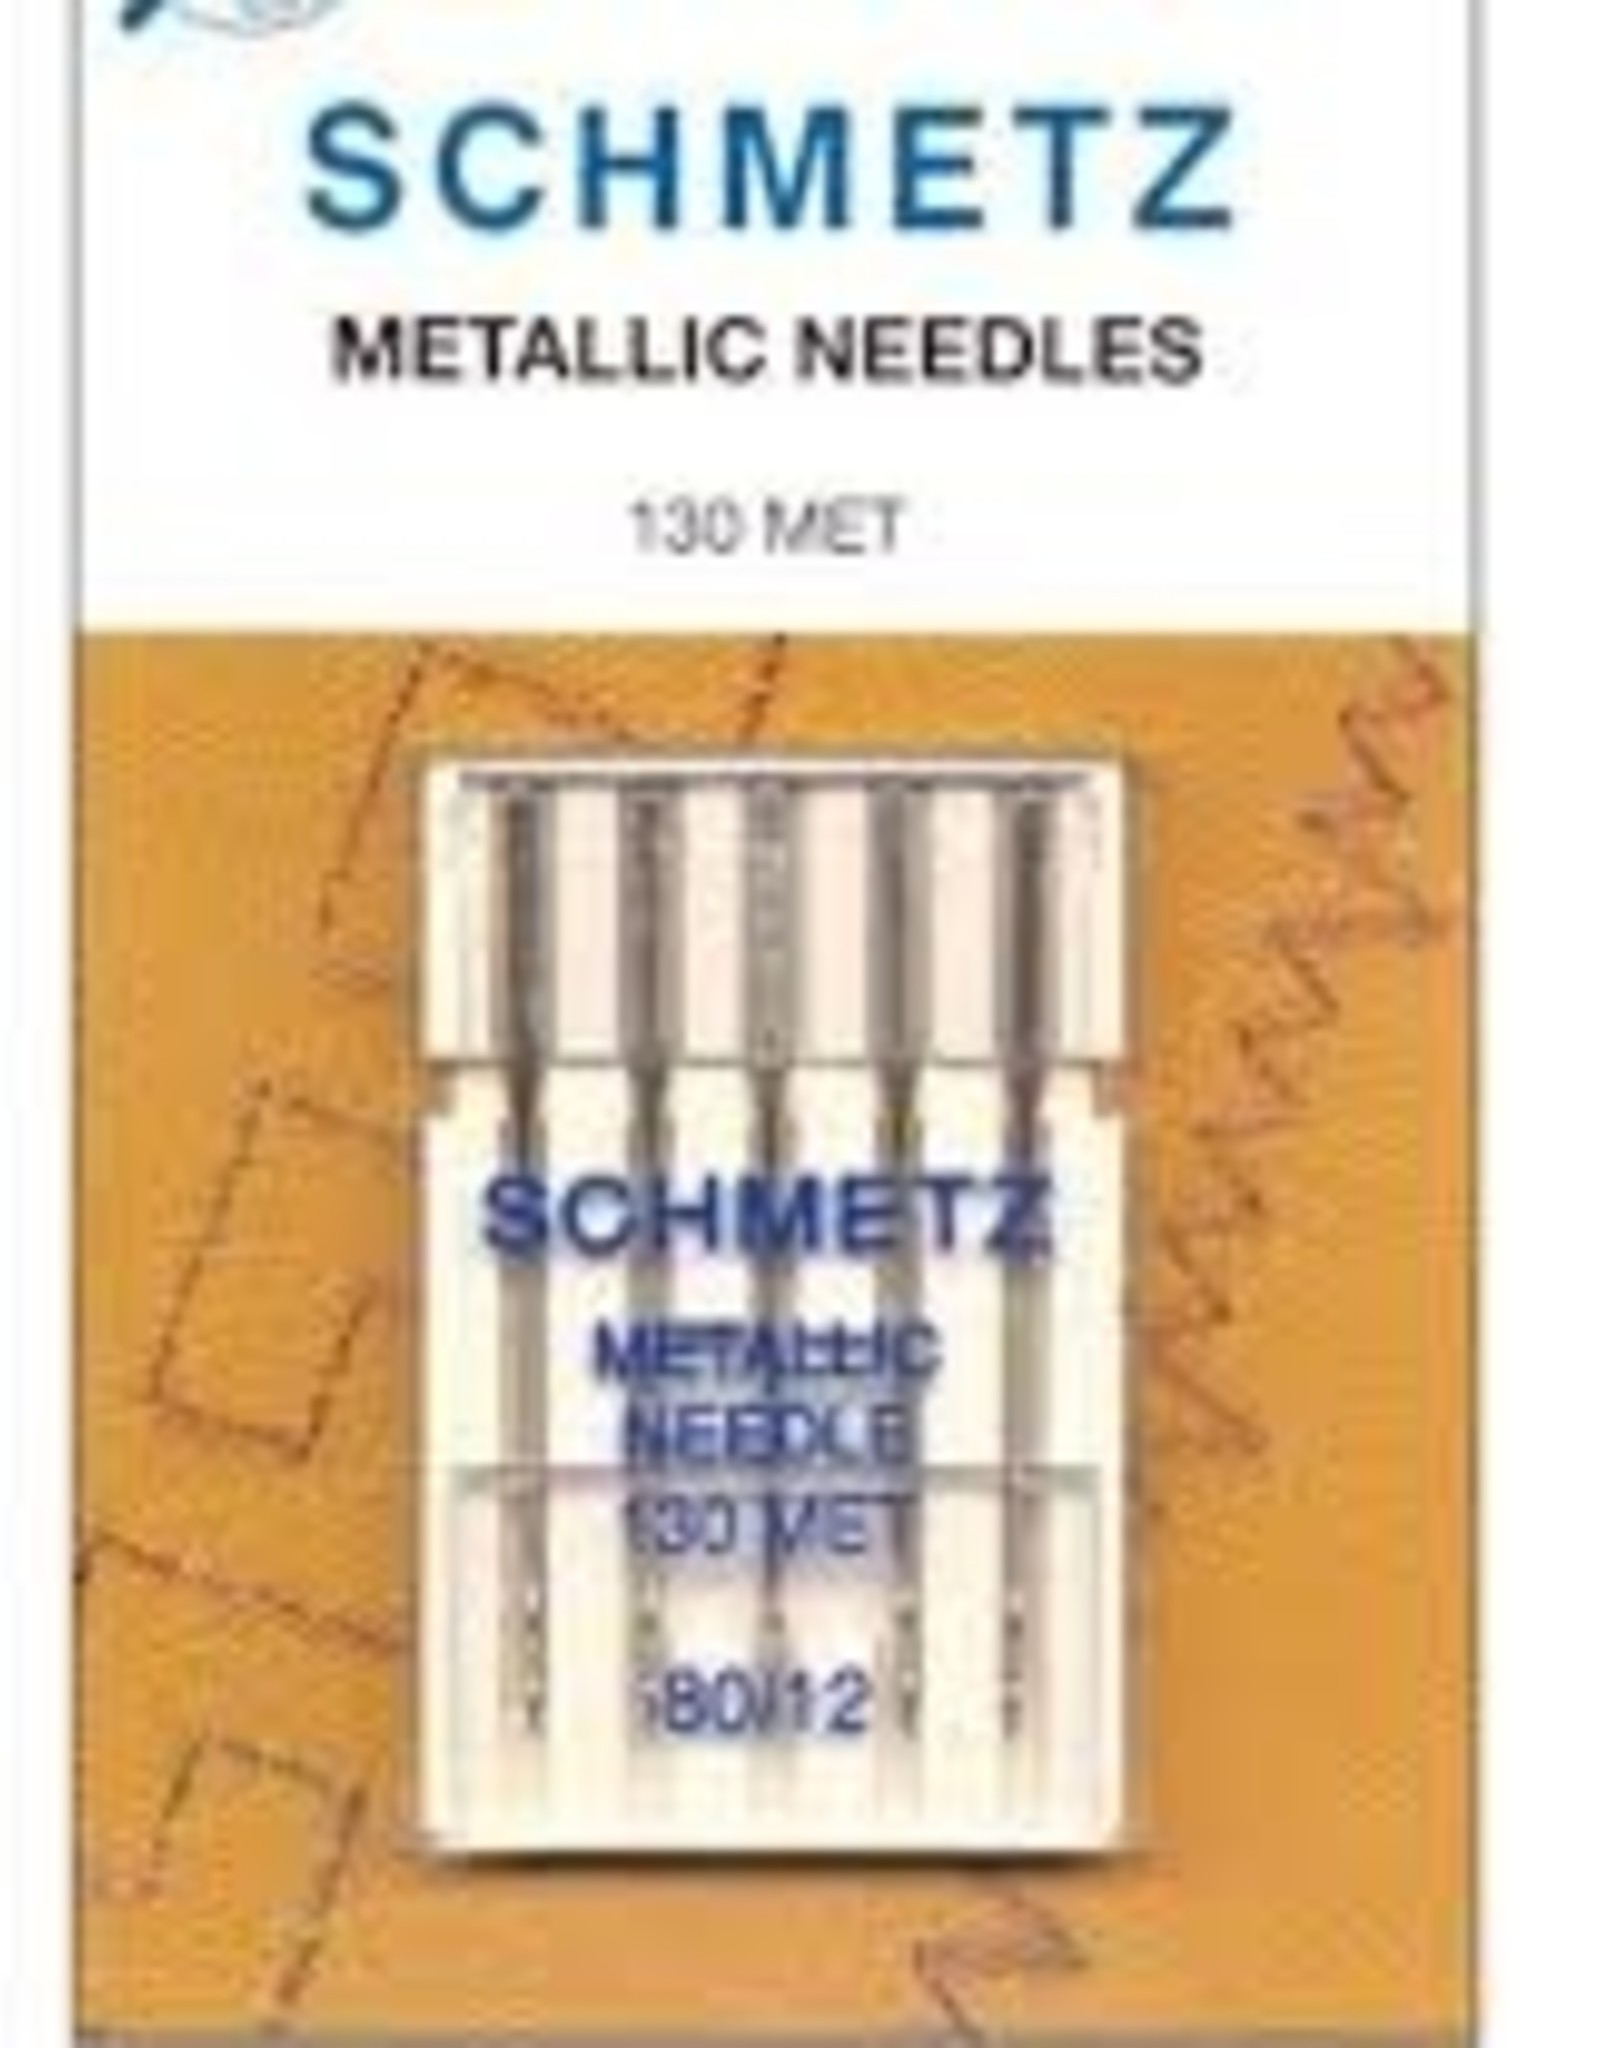 schmetz schmetz metallic 80/12